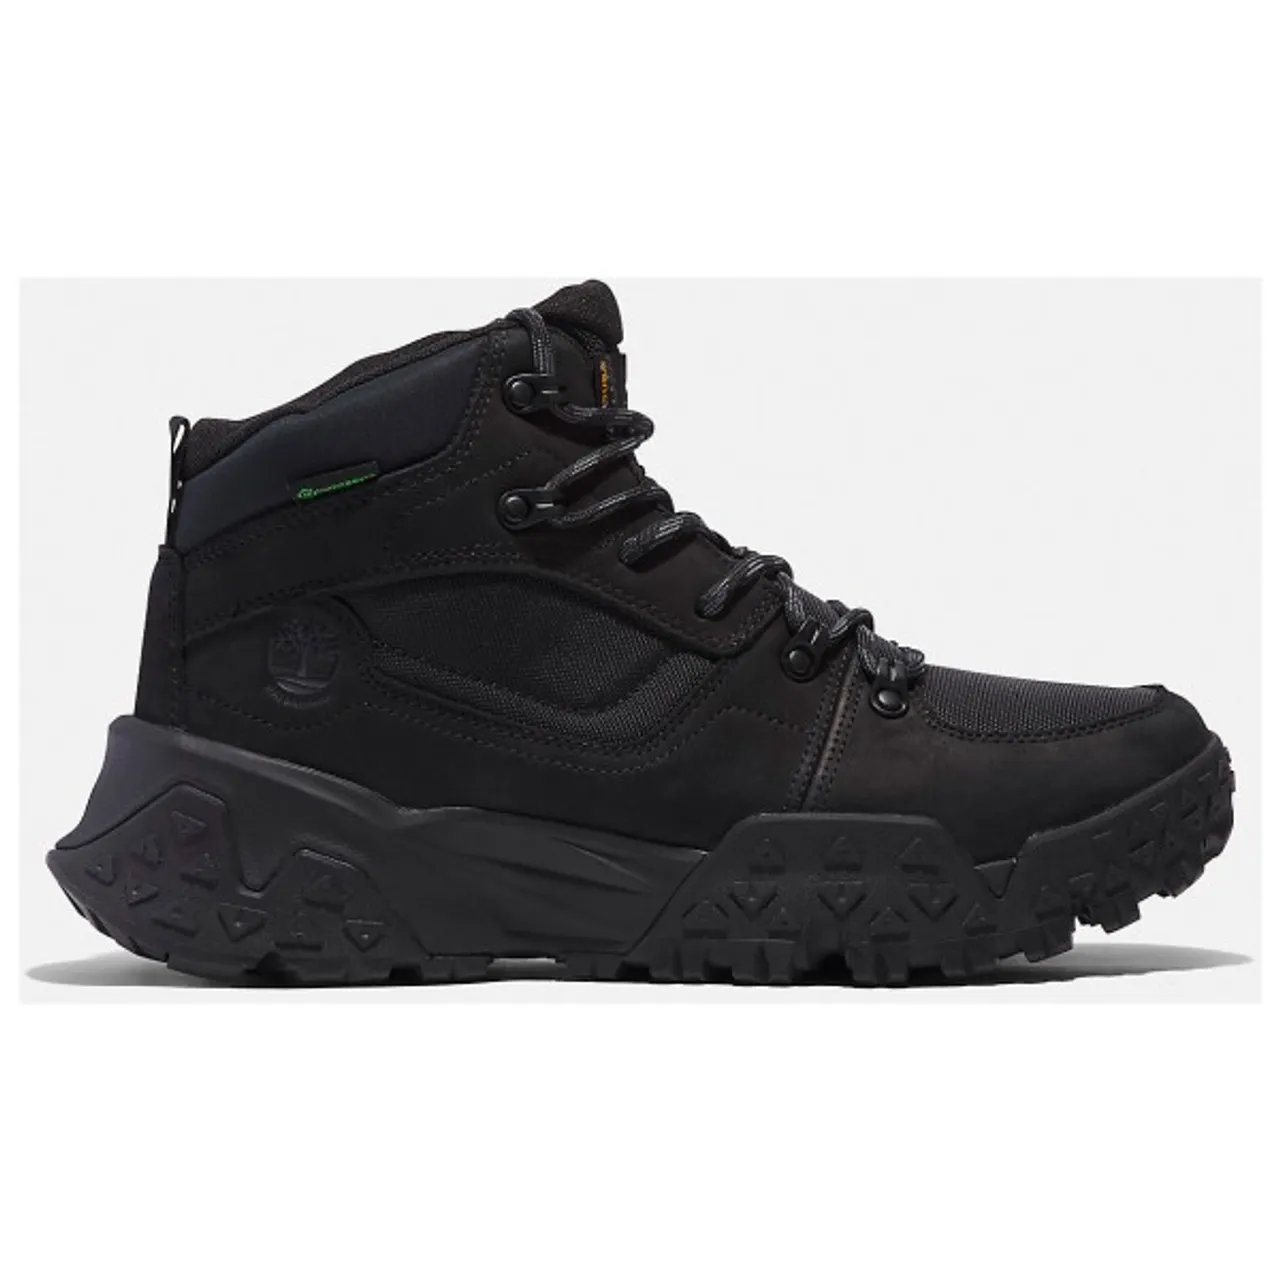 Timberland - Motion Scramble Mid Lace Up Waterproof Boot - Walking boots